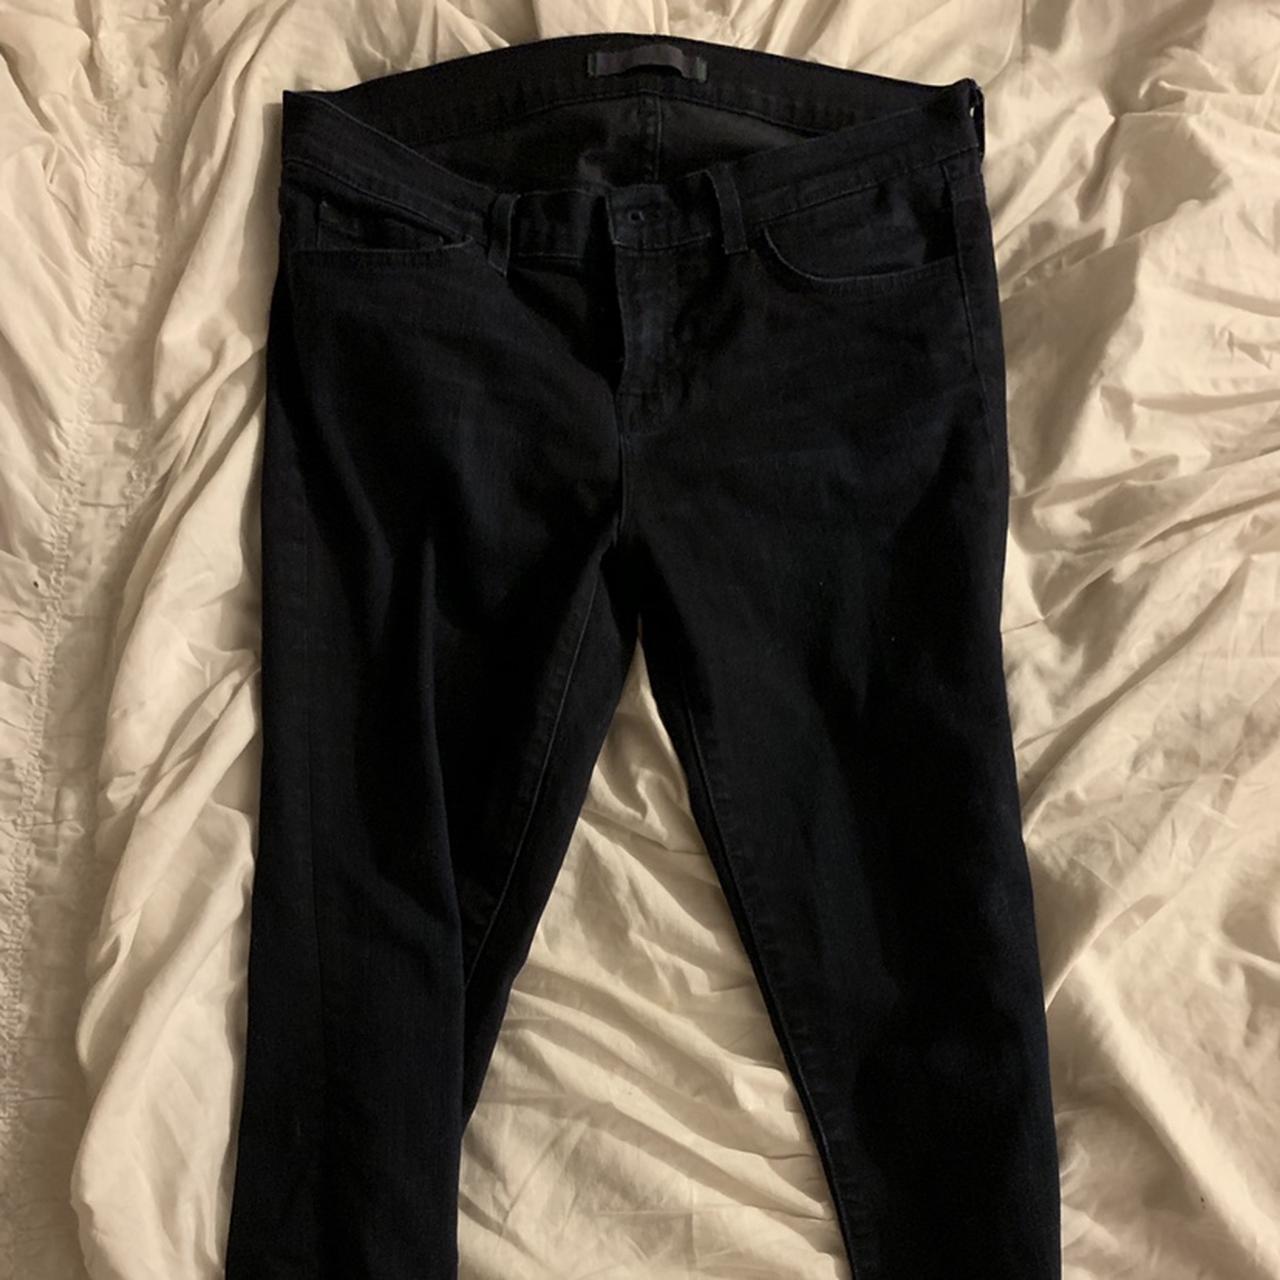 Black J Brand Skinny jeans Size 30 #jbrand - Depop